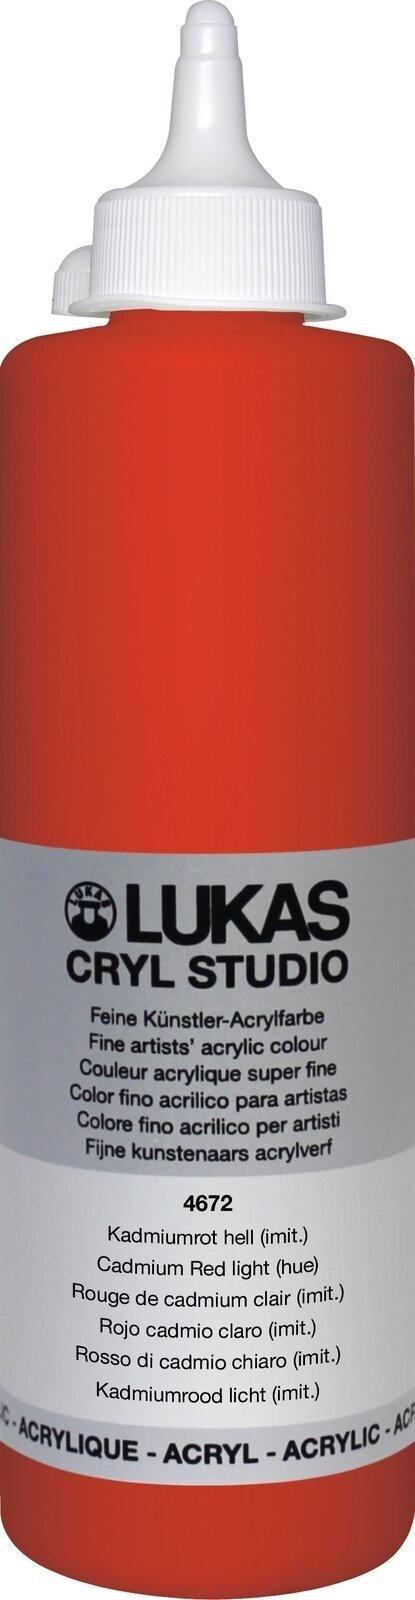 Acrylfarbe Lukas Cryl Studio Acrylfarbe 500 ml Cadmium Red Light Hue